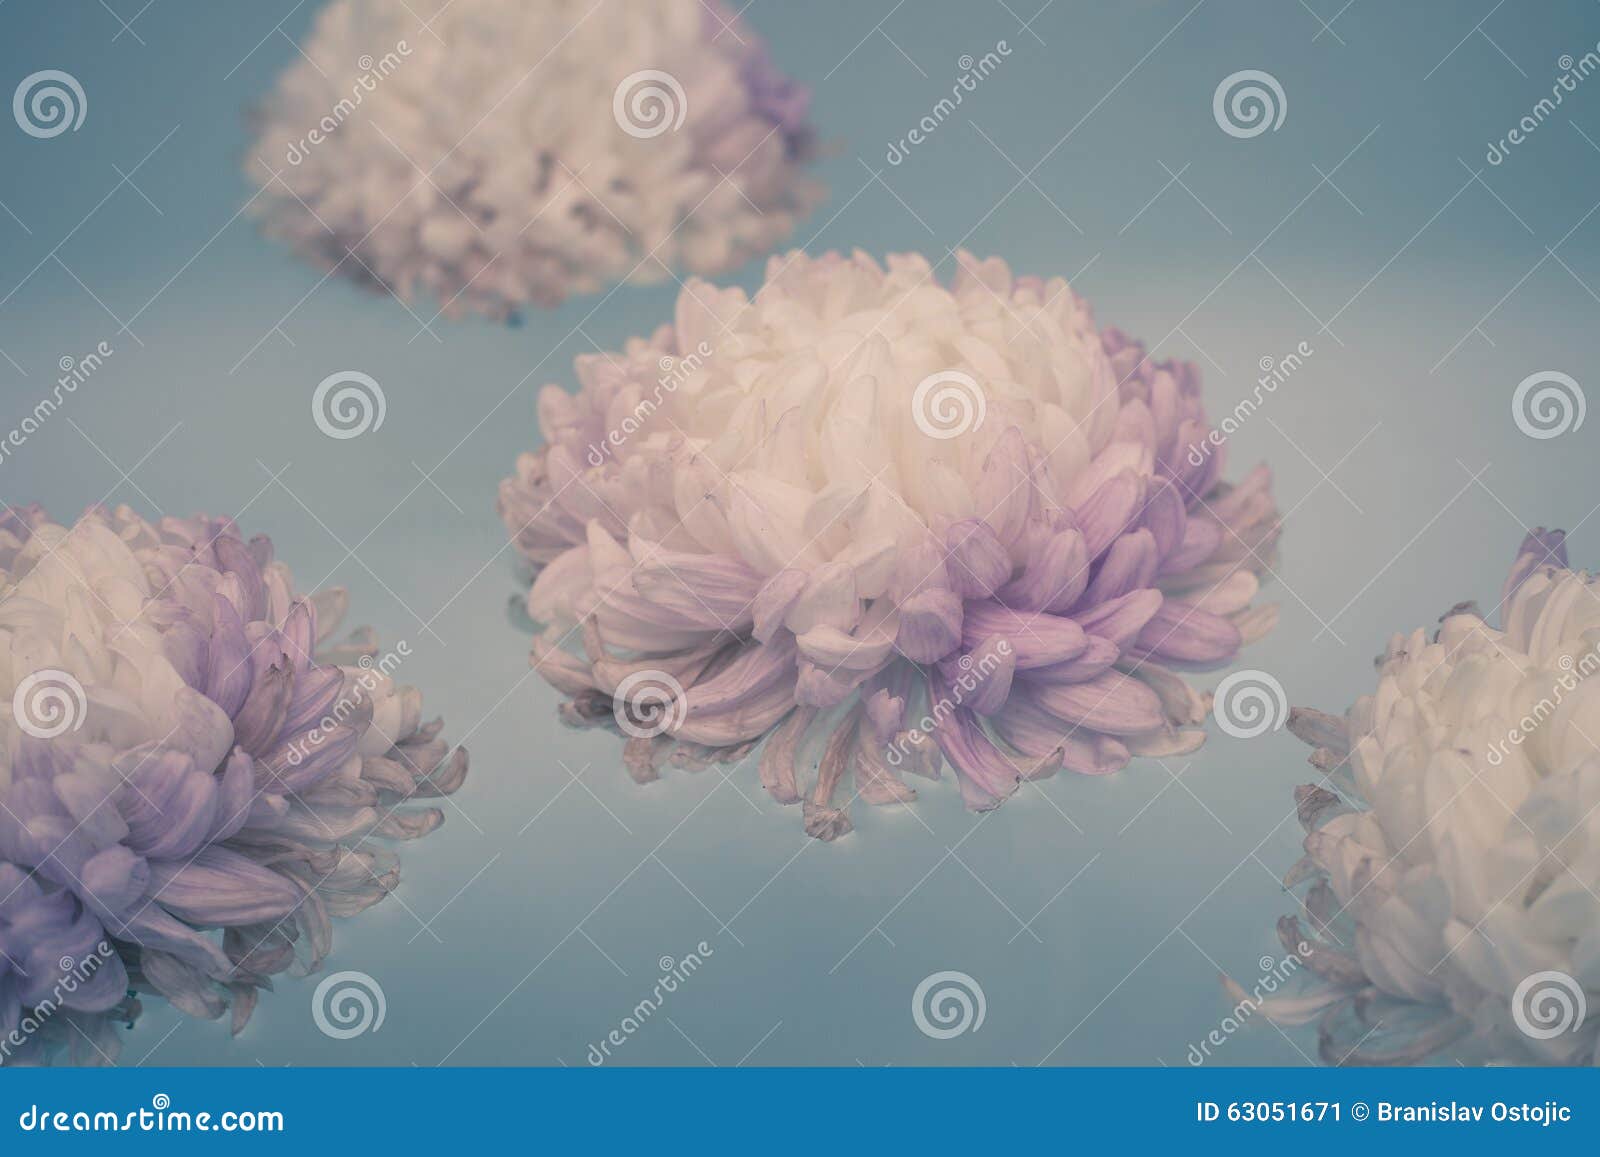 flower of chrysanthemum floating